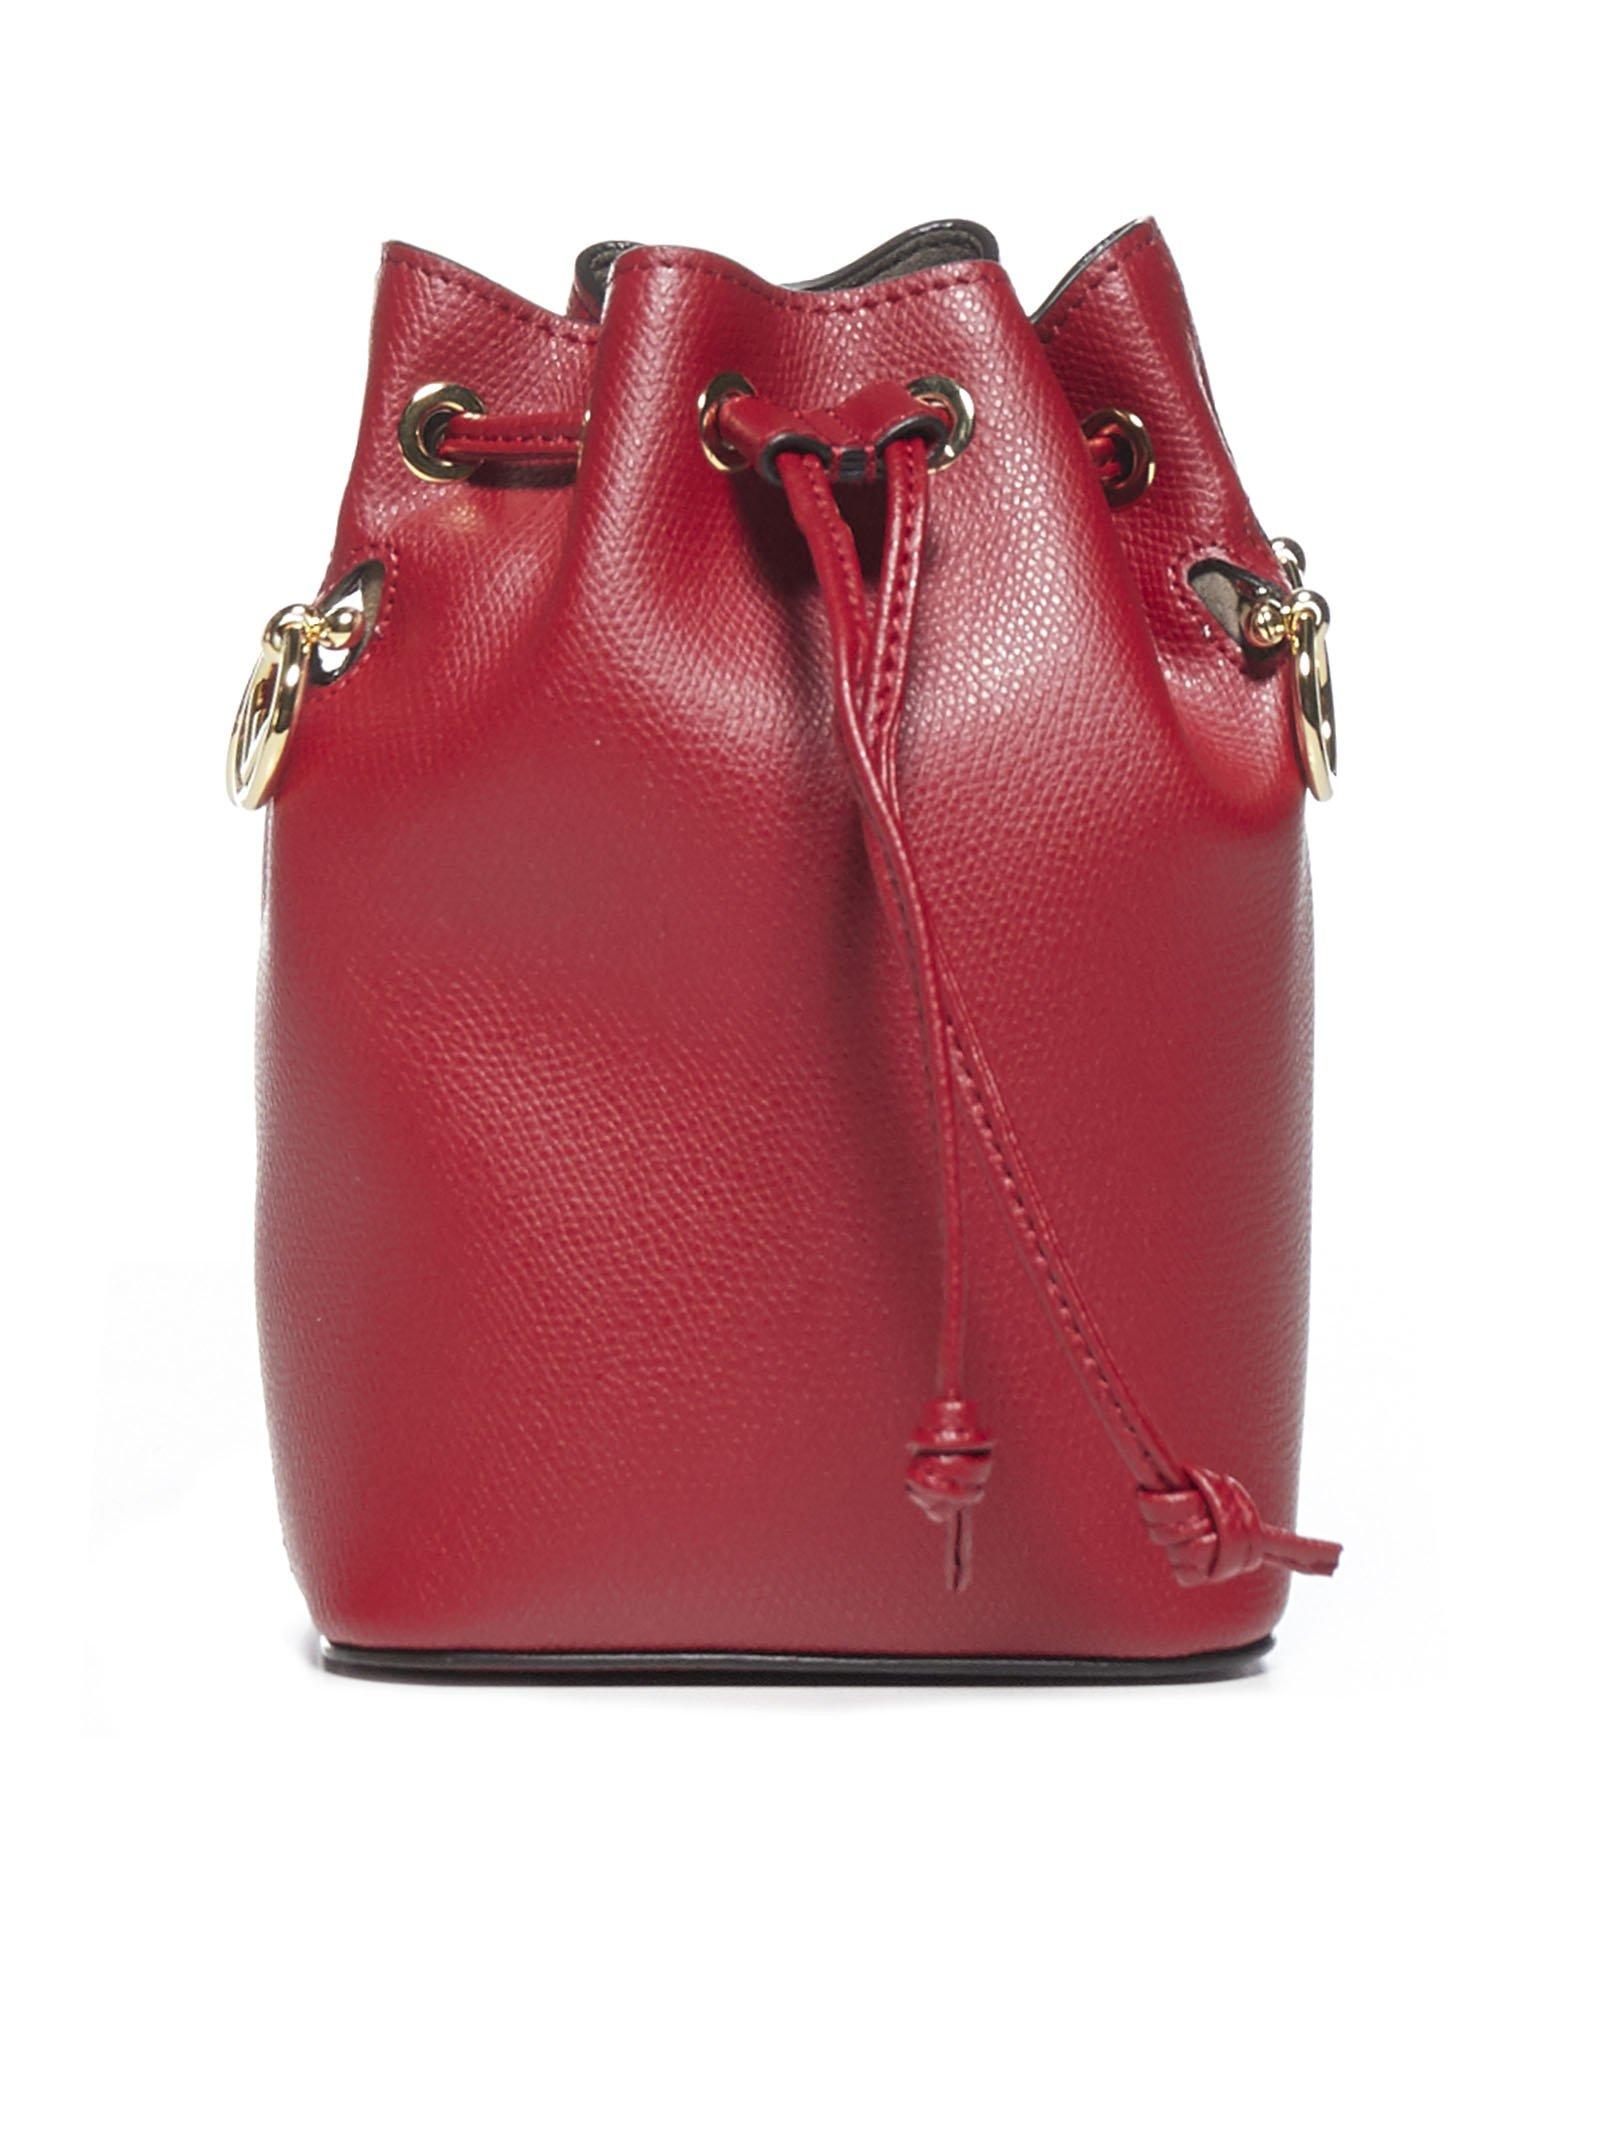 Fendi Leather Mon Tresor Mini Bucket Bag in Red - Lyst